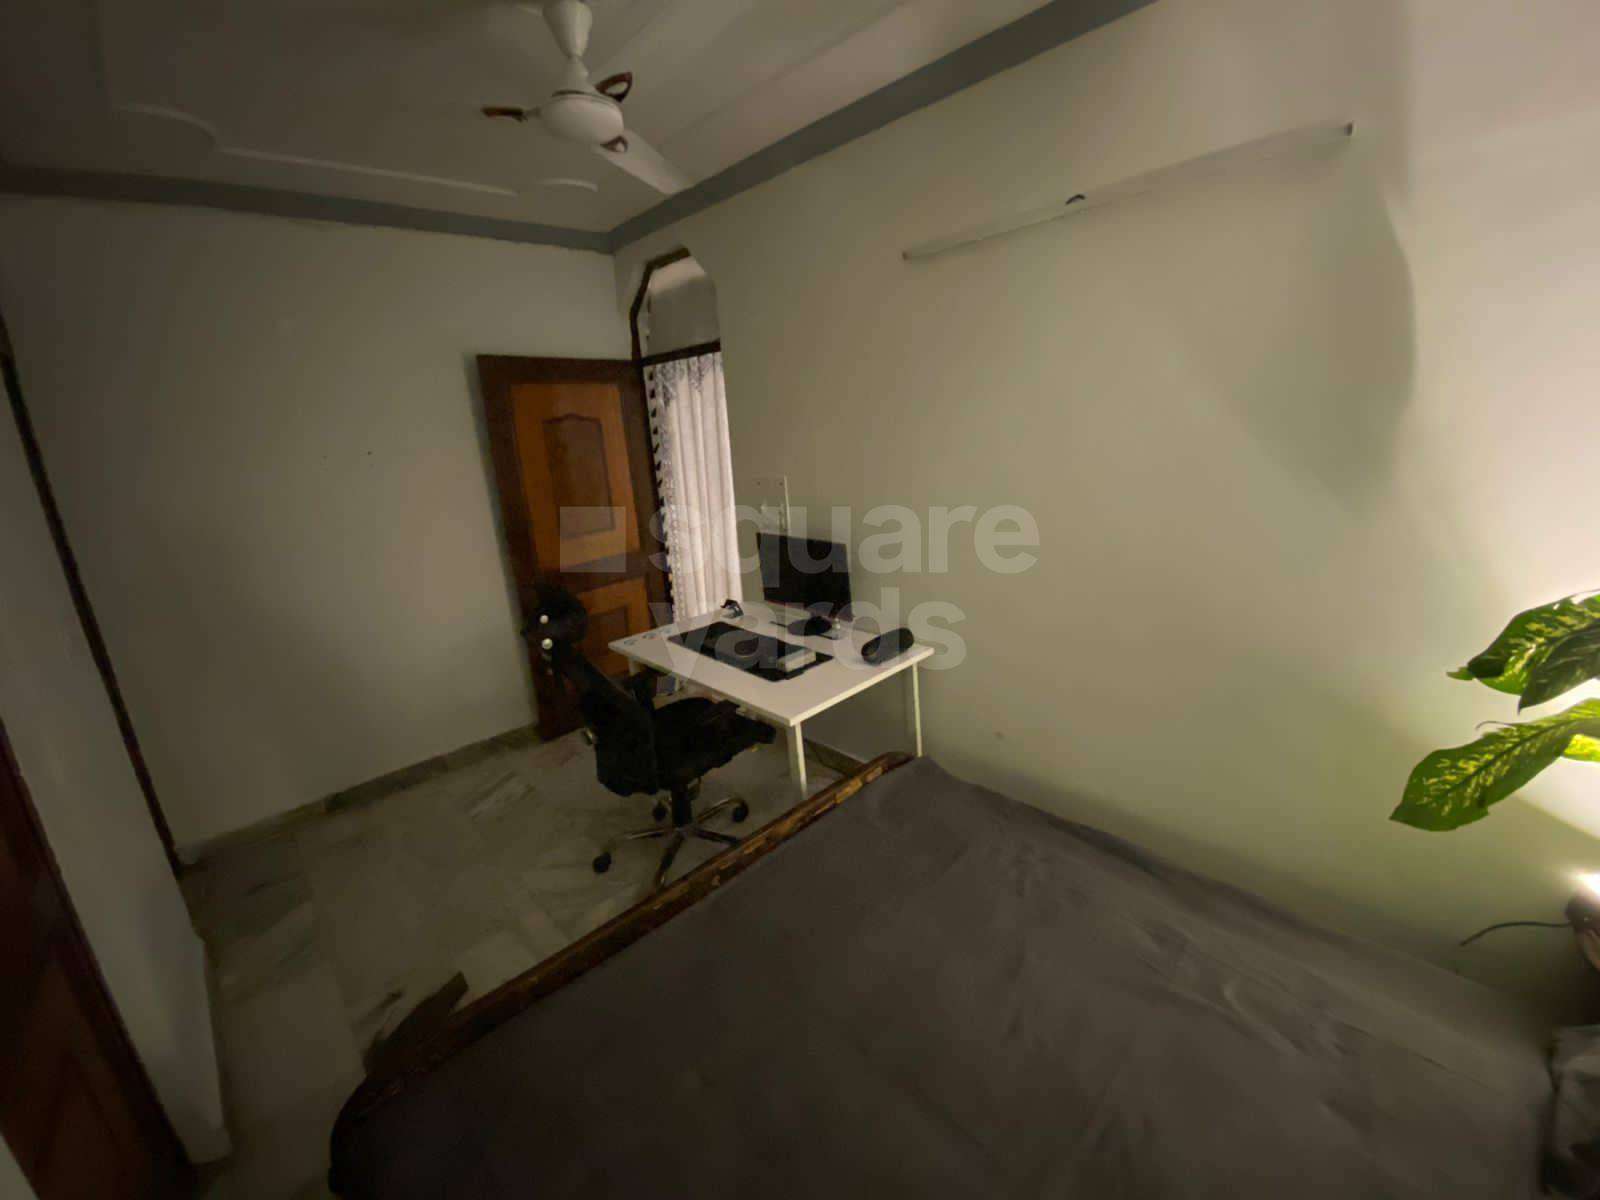 Rental 2 Bedroom 500 Sq.Ft. Builder Floor In West Patel Nagar Delhi -  5276739